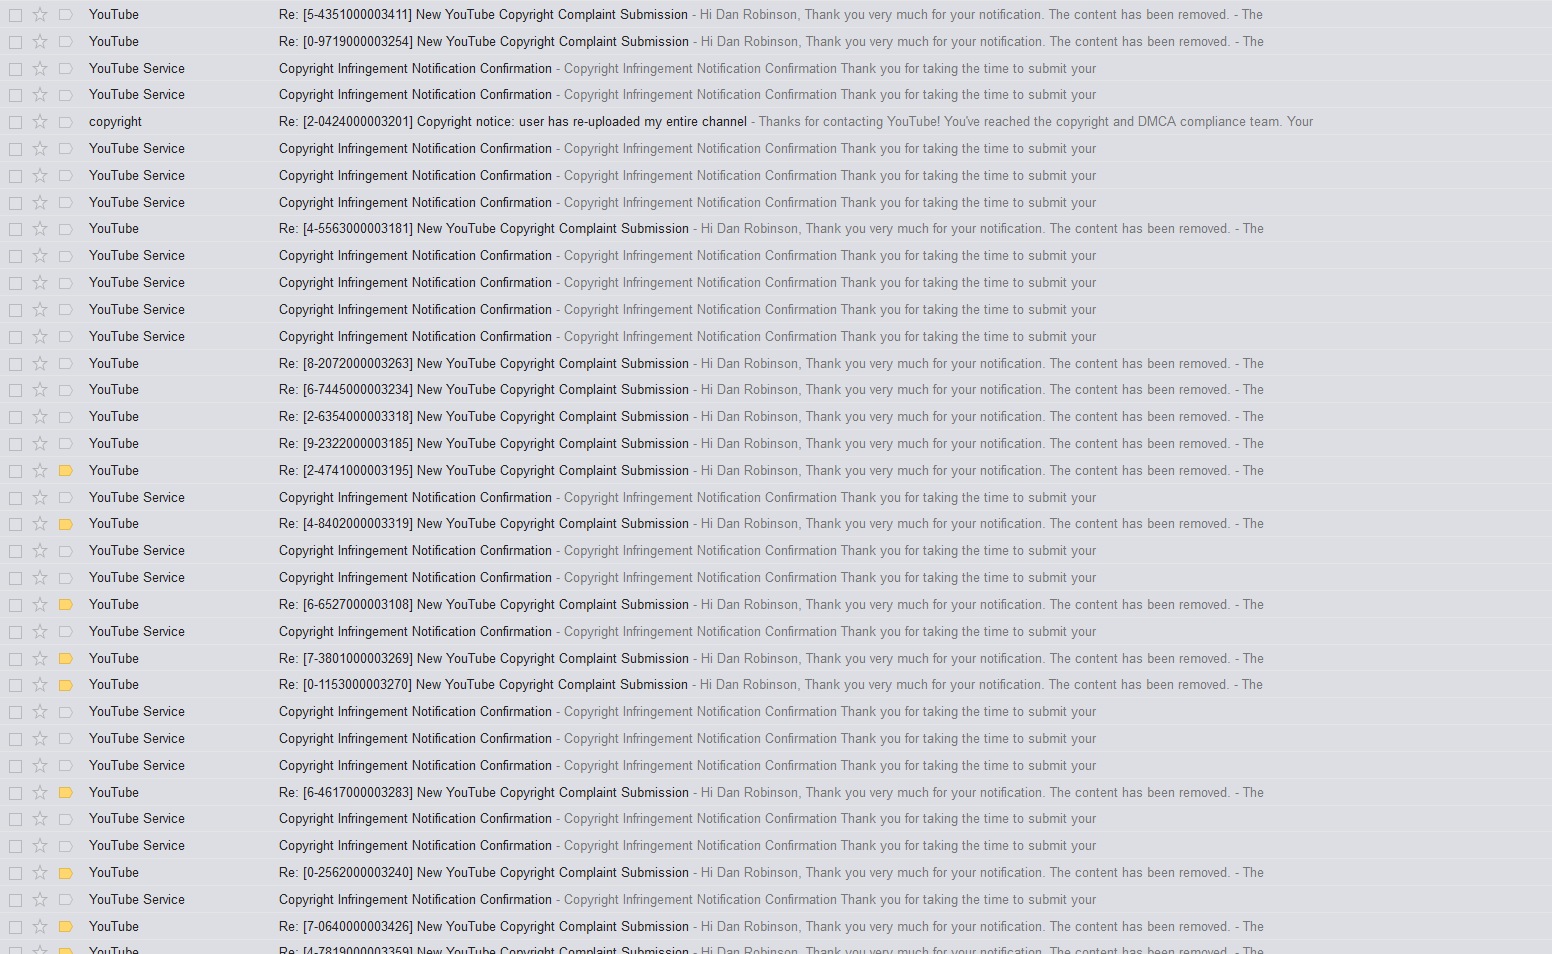 Gmail inbox full of Youtube DMCA activity